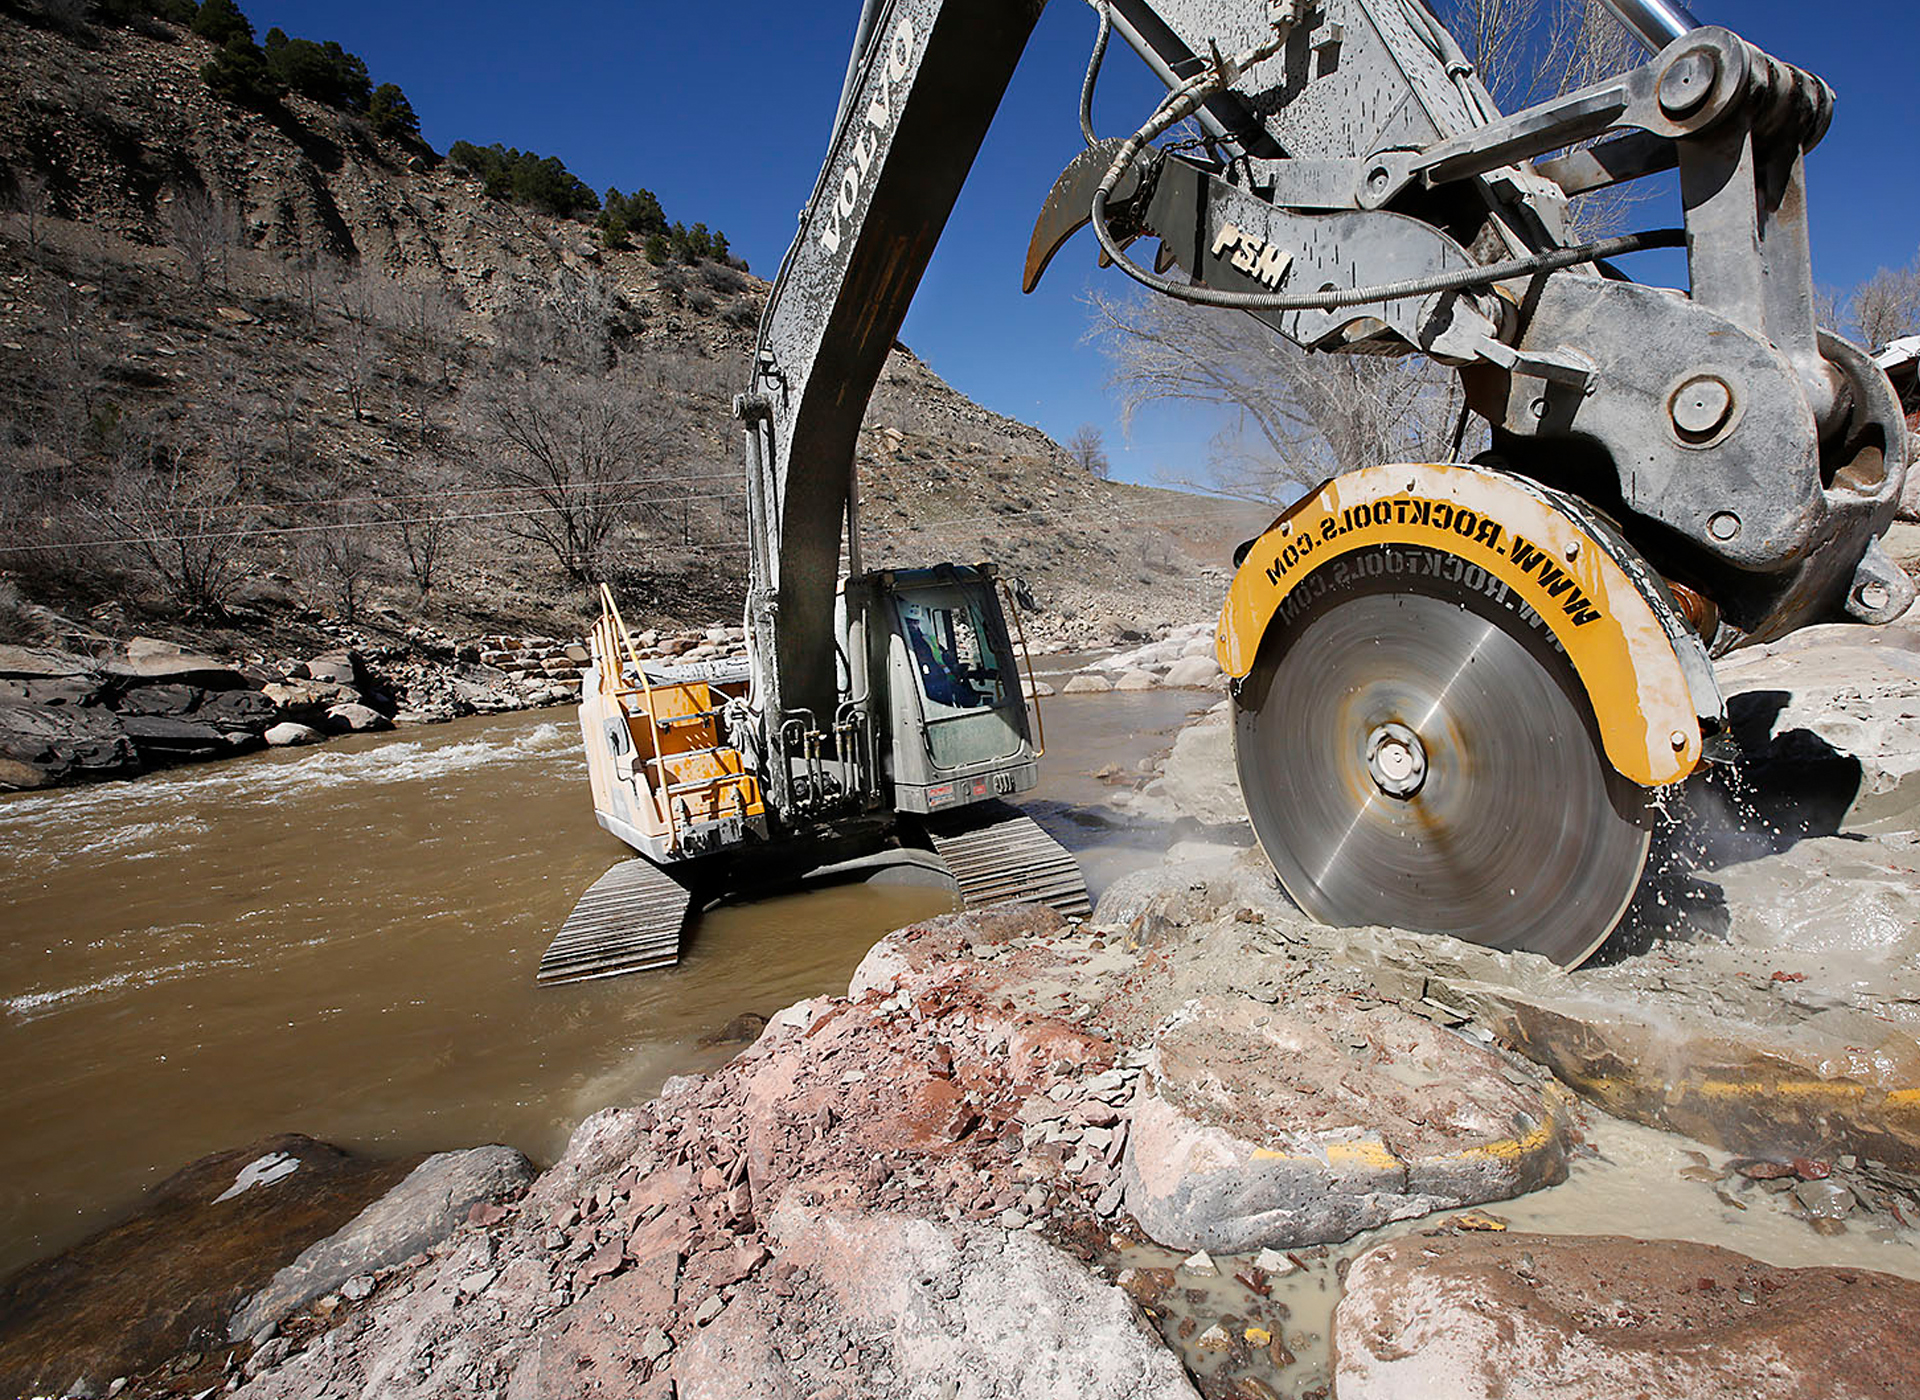 Volvo excavator saws through rock at Durango Whitewater Park in Colorado